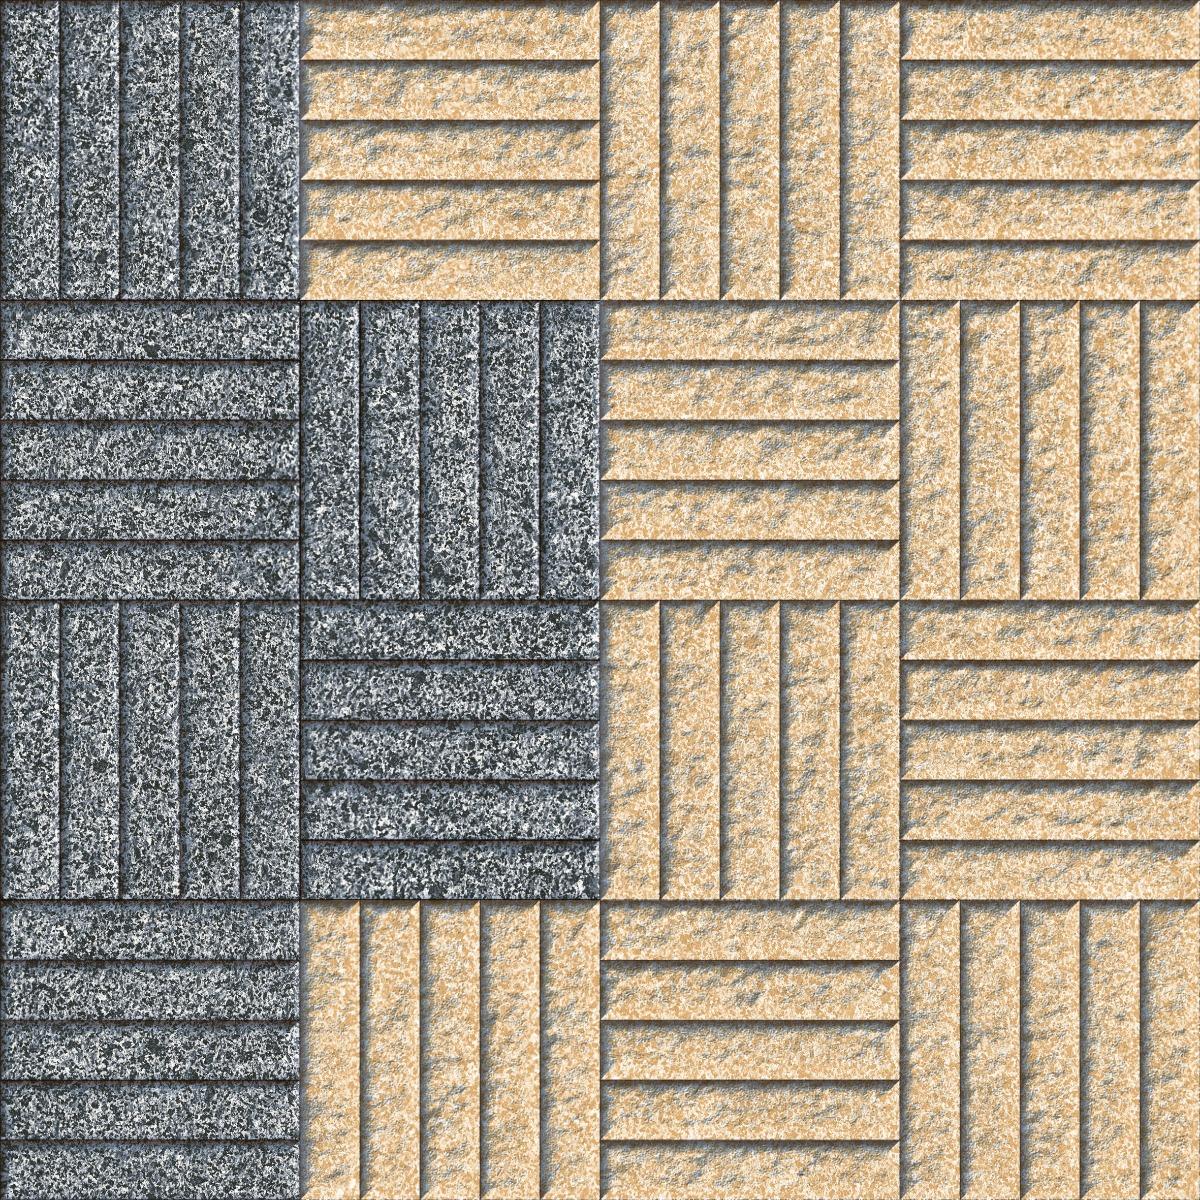 1x1 Tiles for Commercial Tiles, Parking Tiles, Office Tiles, Pathway Tiles, Hospital Tiles, High Traffic Tiles, Bar/Restaurant, Outdoor Area, Porch/Parking